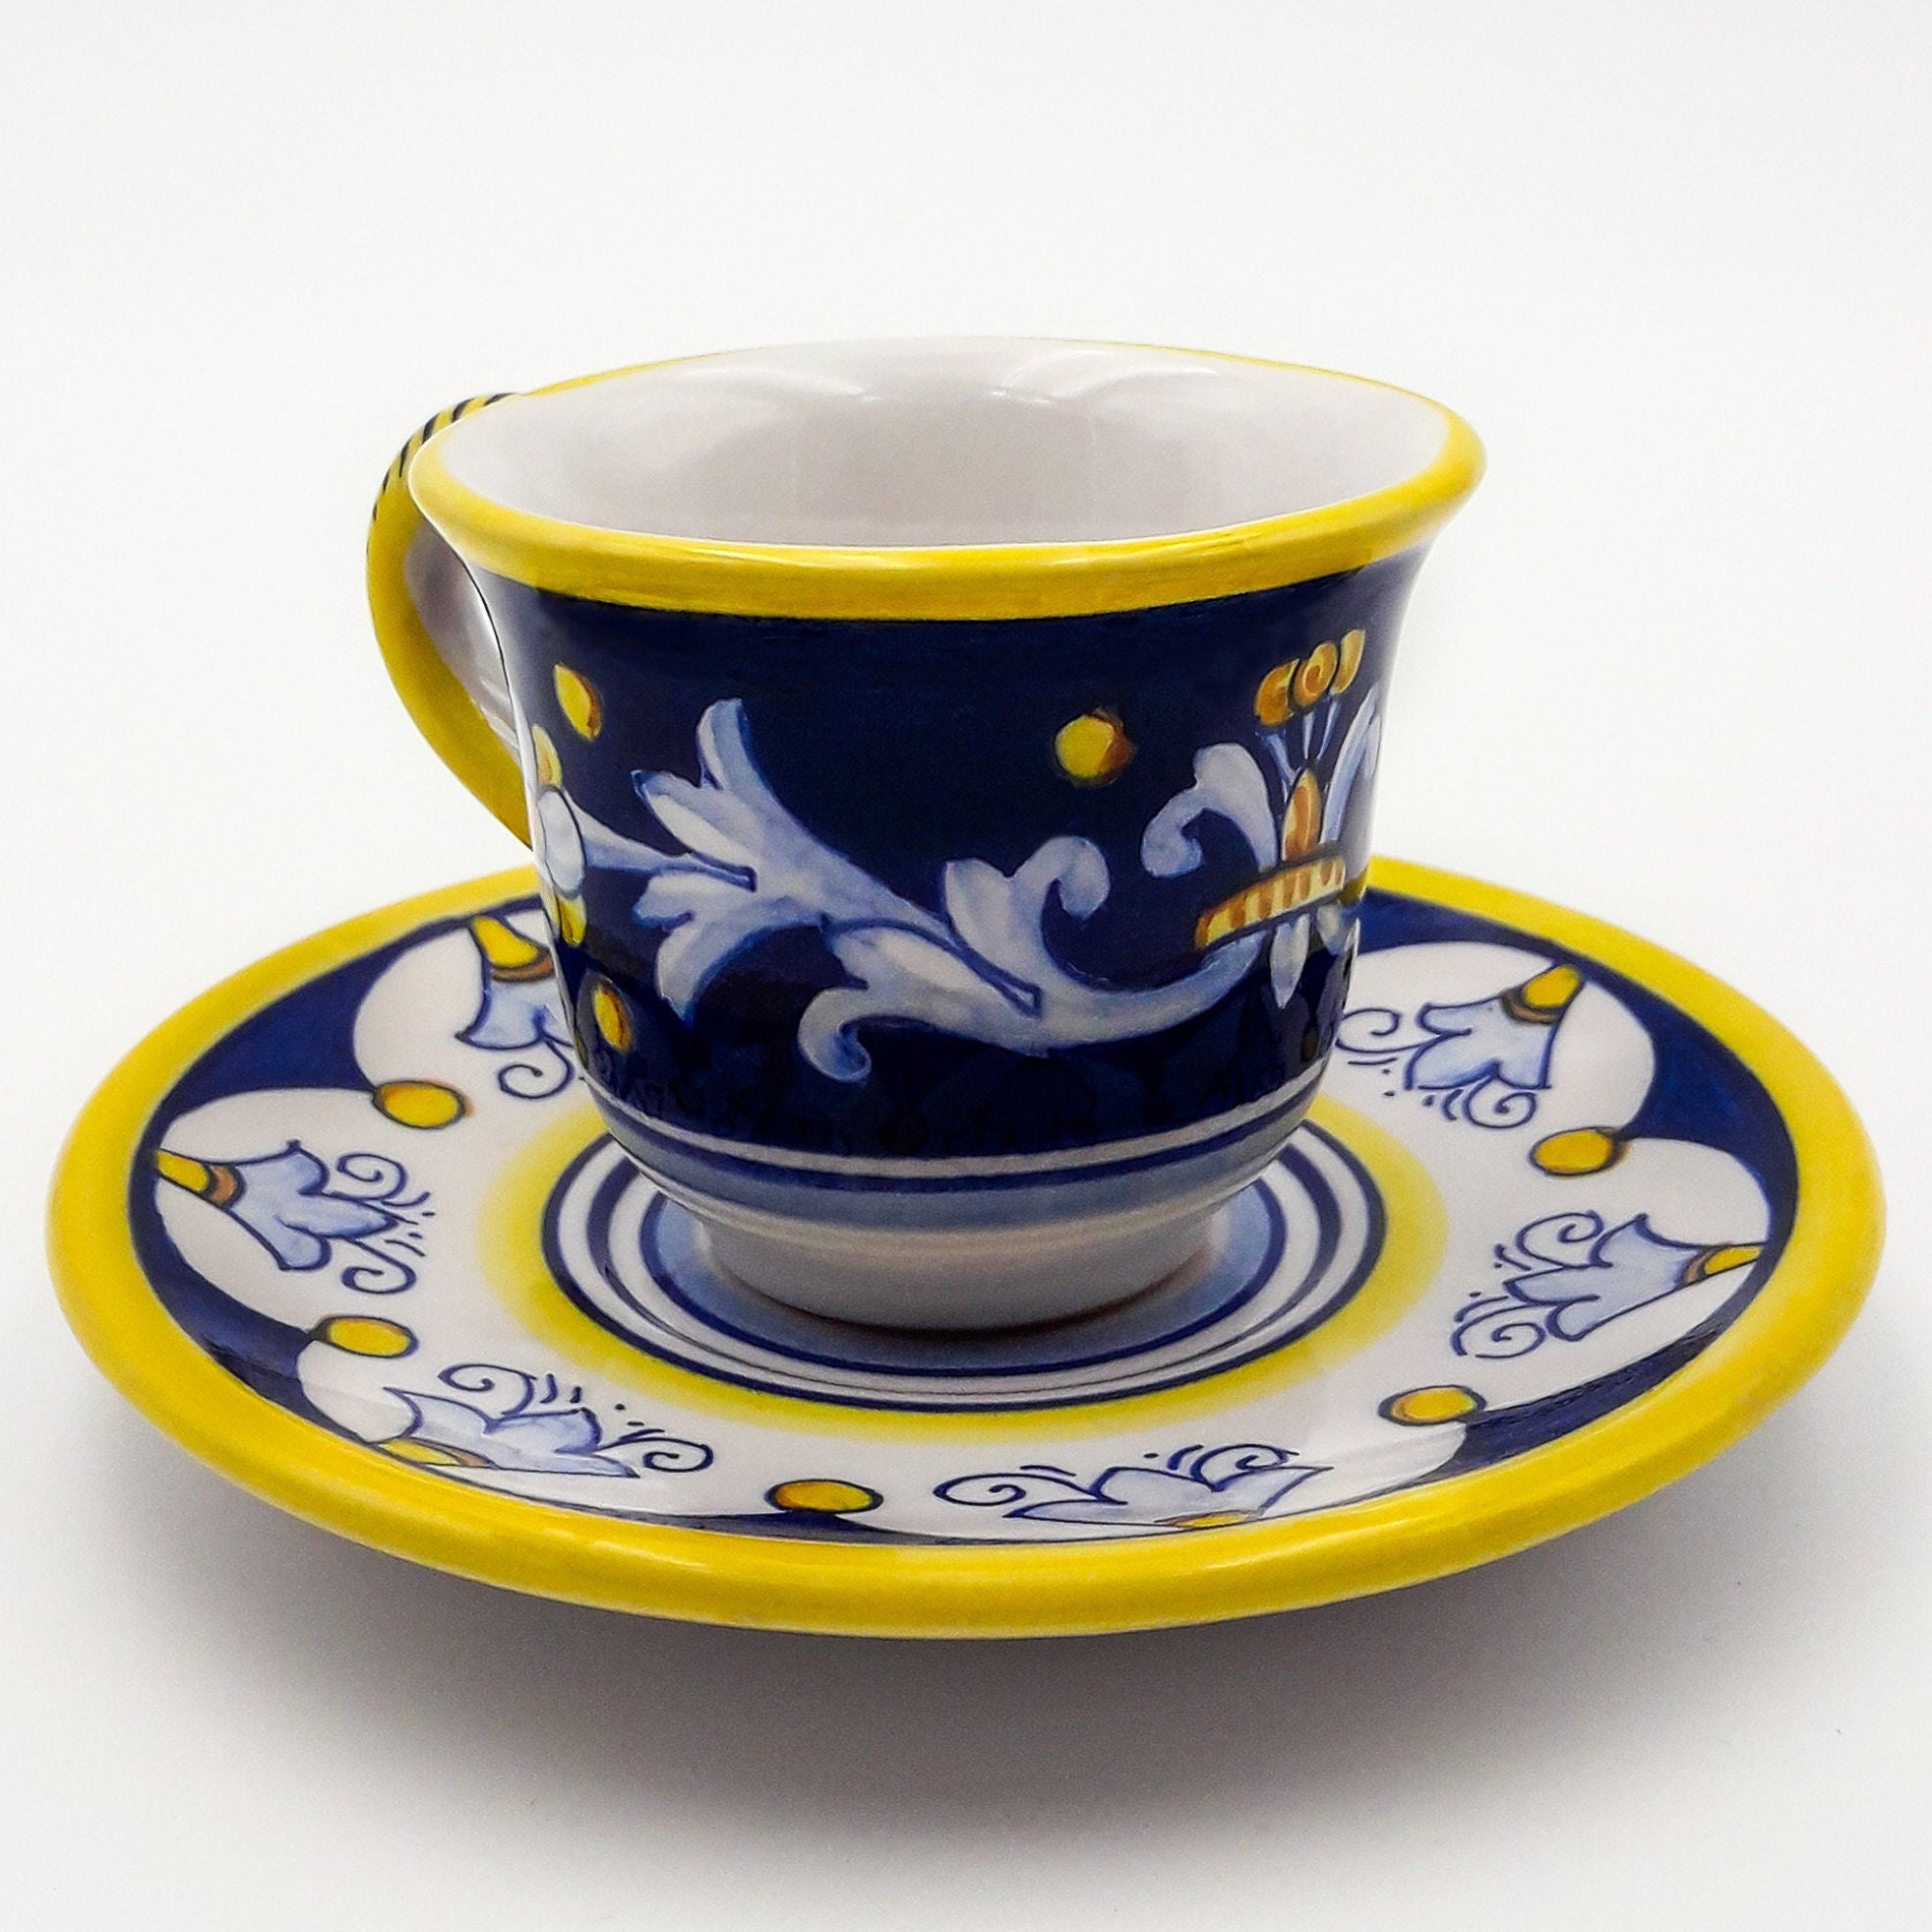 Fima thatsArte.com - Italian Ceramic Espresso Cup & Saucer Ricco Deruta Blu  - Hand Painted Cup, Made…See more Fima thatsArte.com - Italian Ceramic